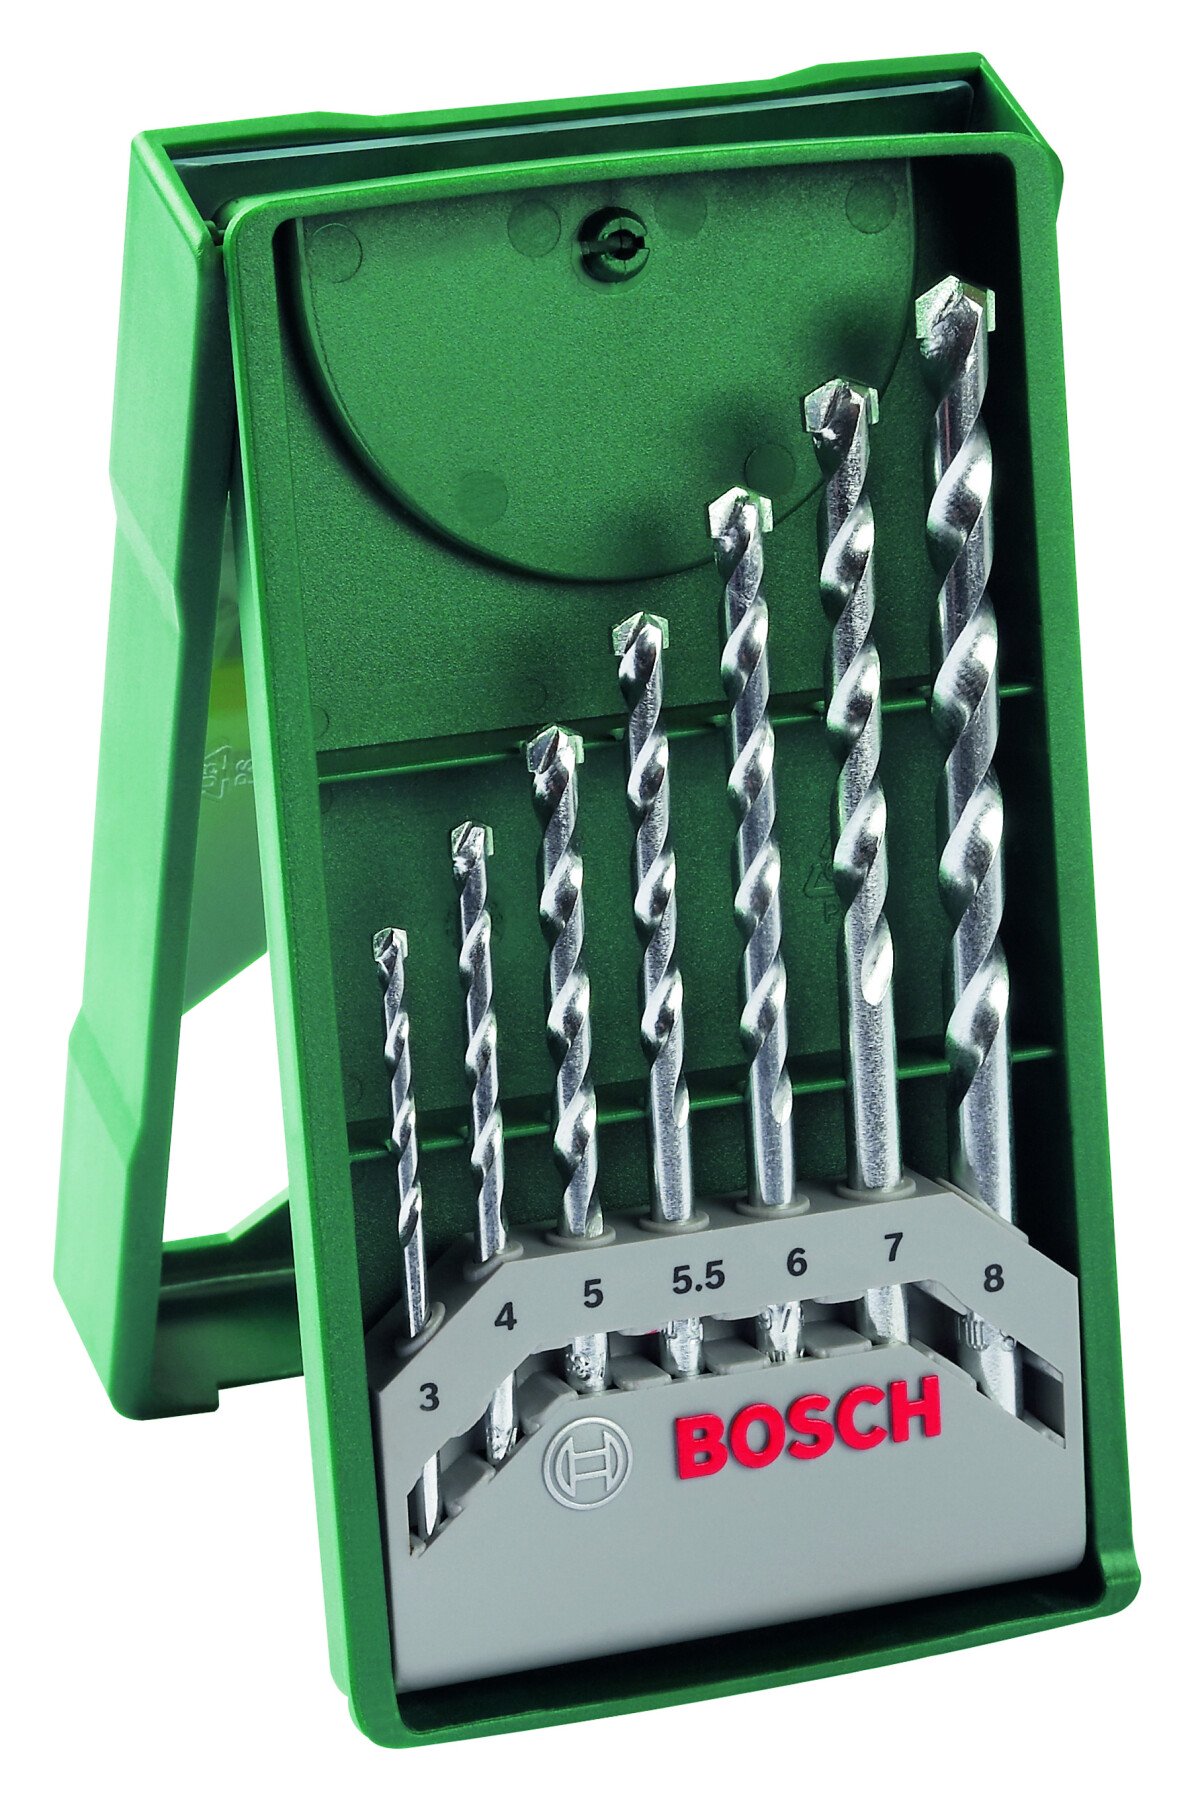 Bosch 2607019581 7-piece Xline Masonry drill bit set